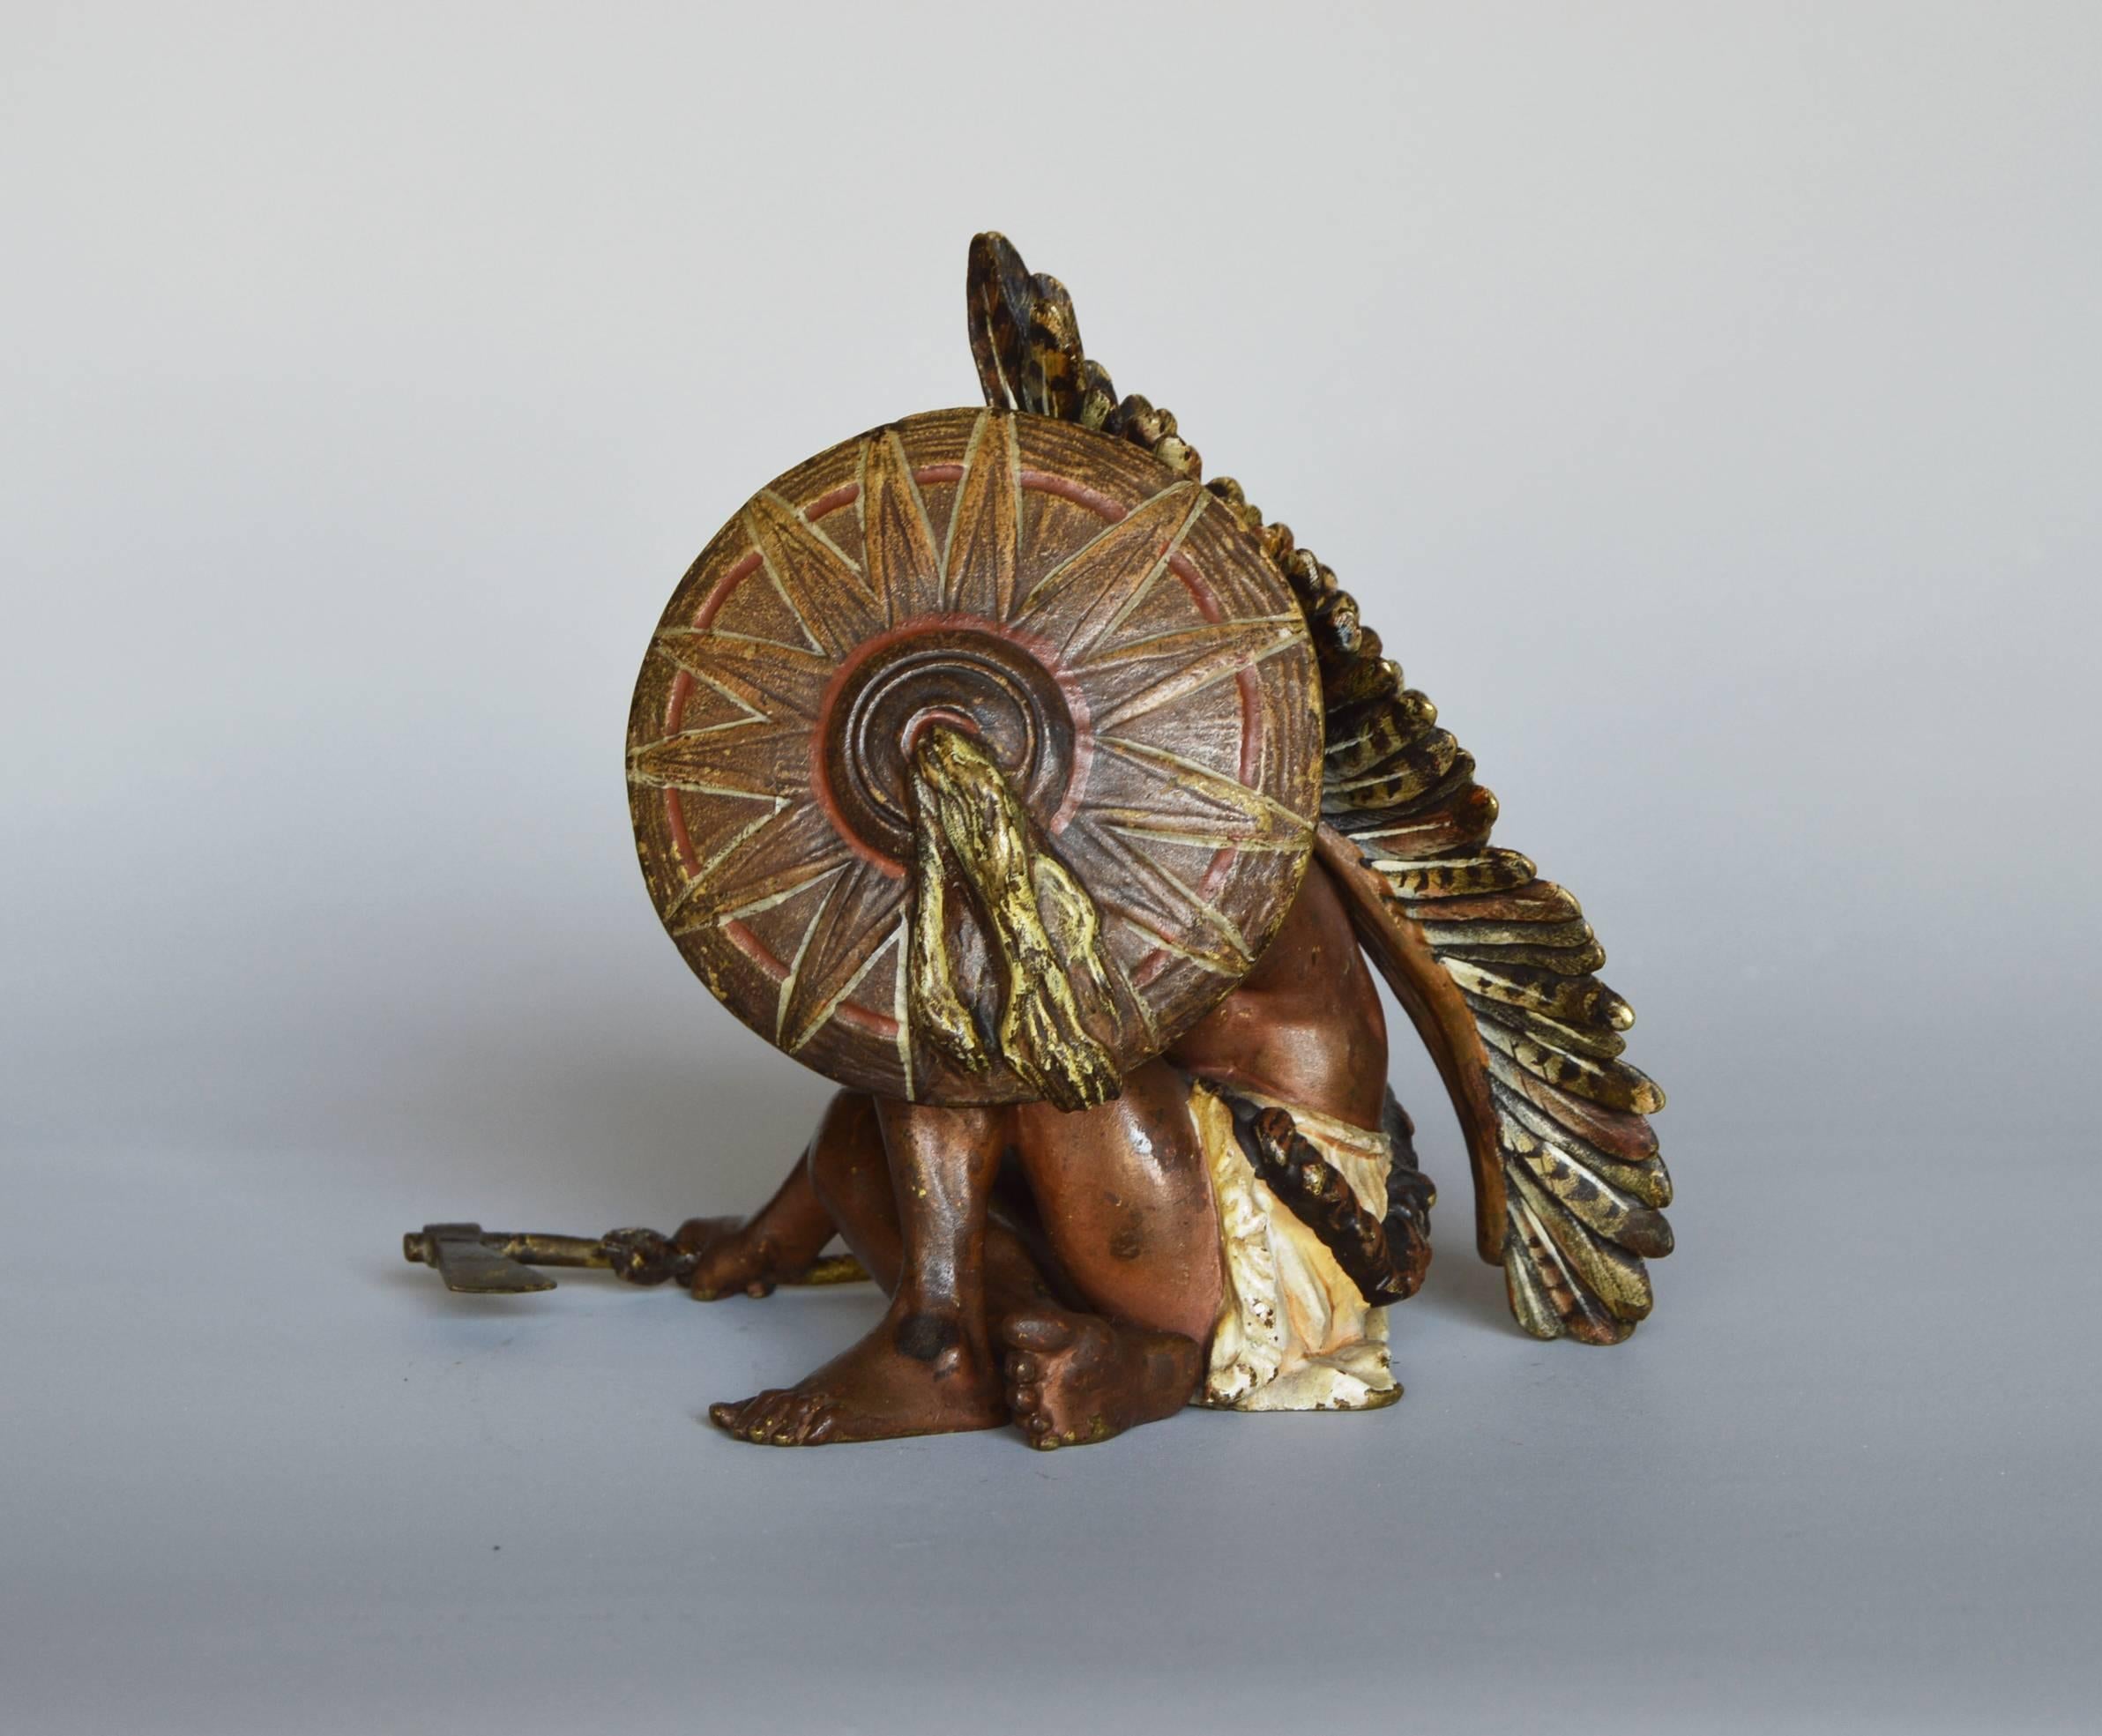 Native American Indian Sitting, bronze sculpture 1